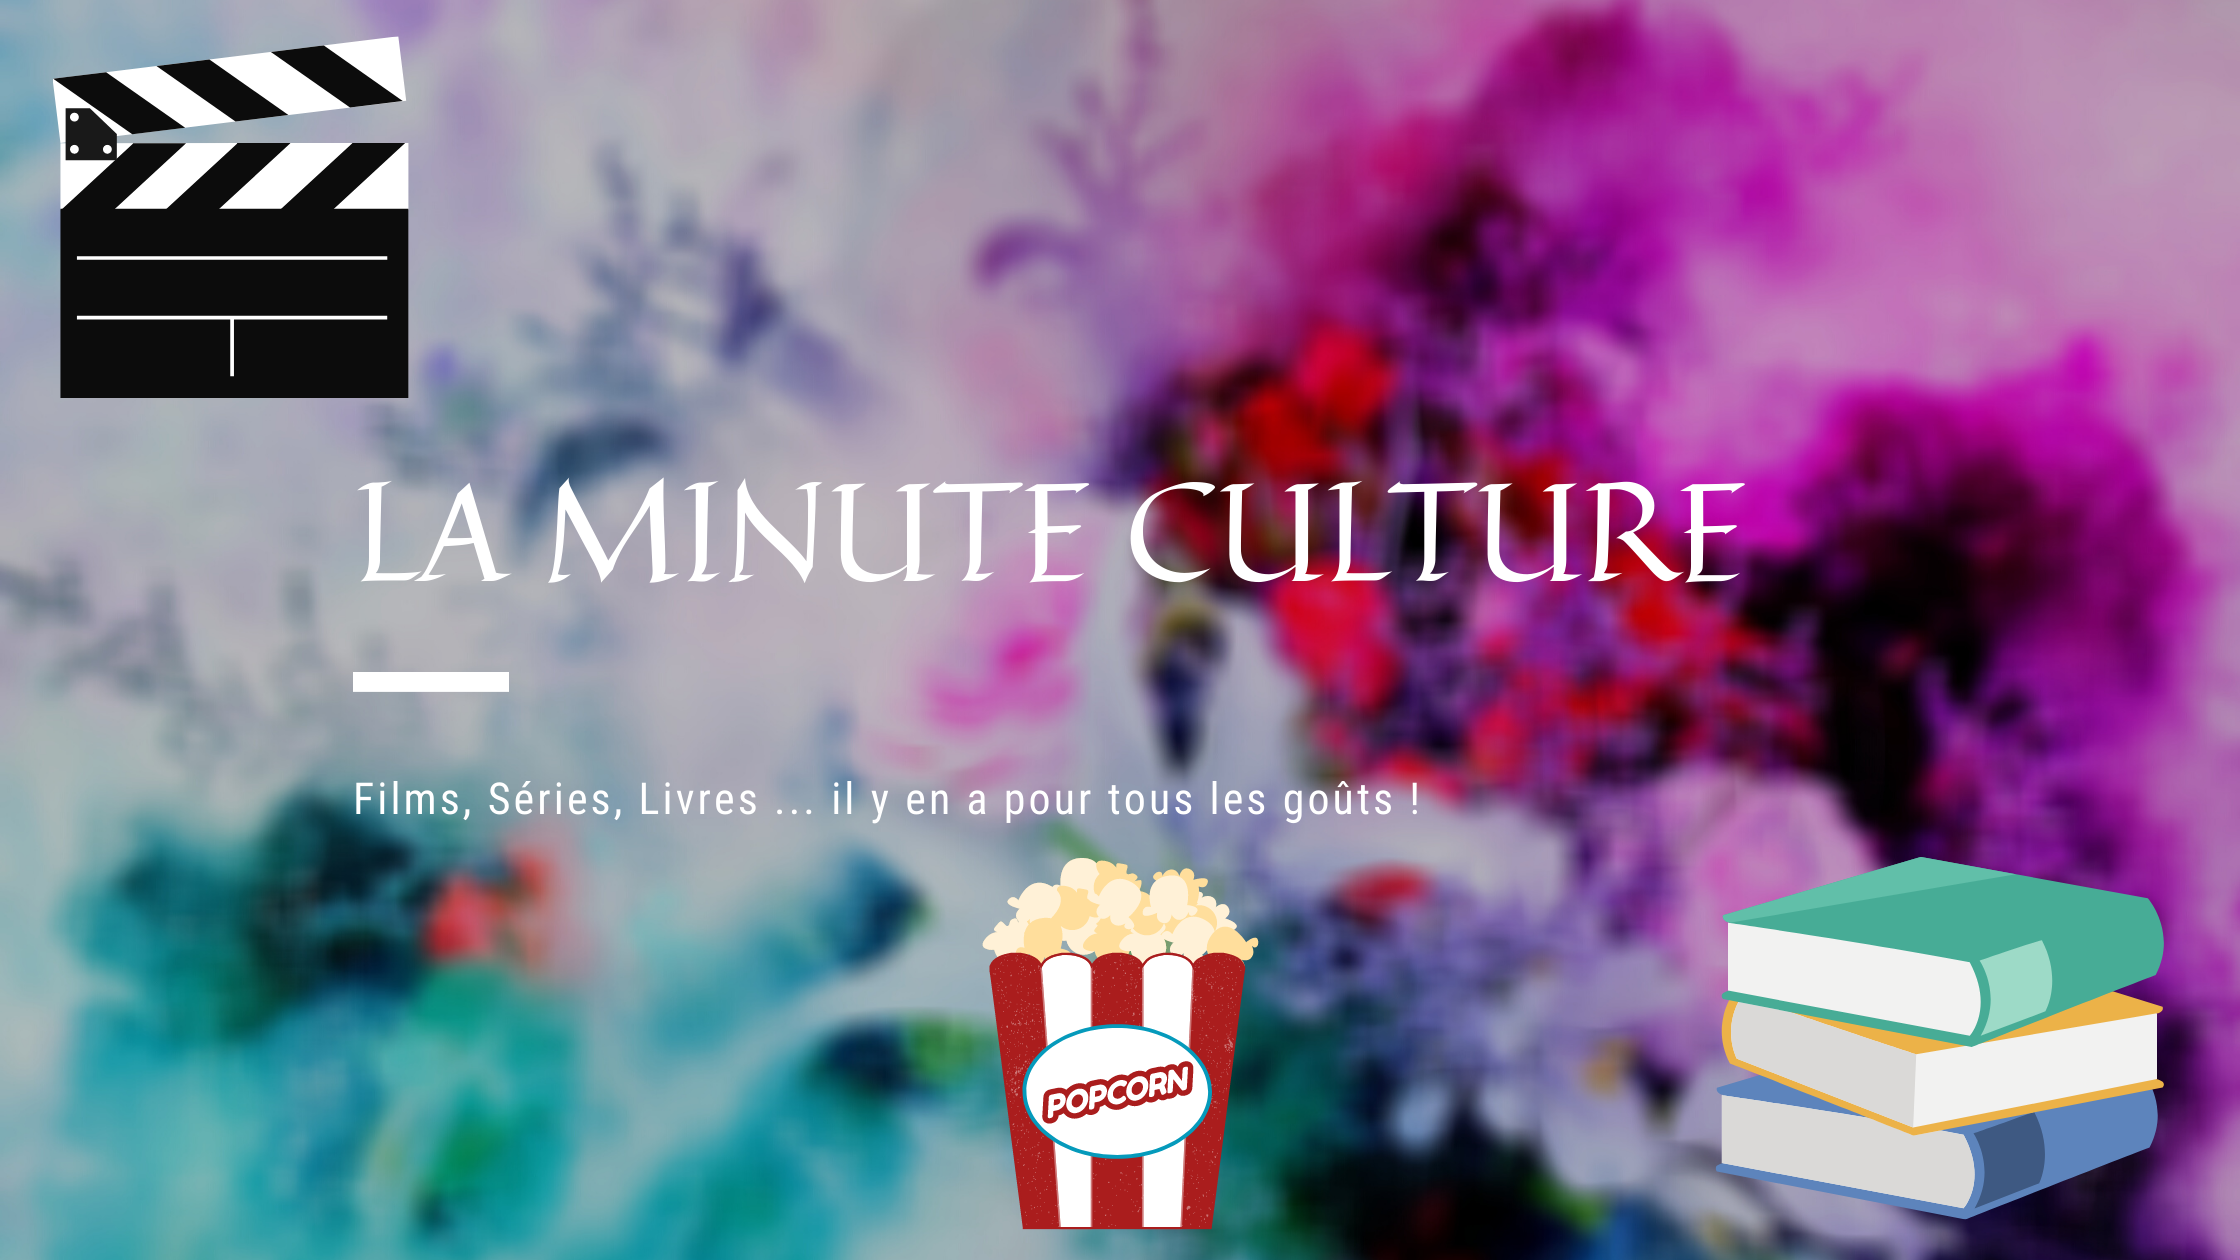 La minute culture - épisode 4